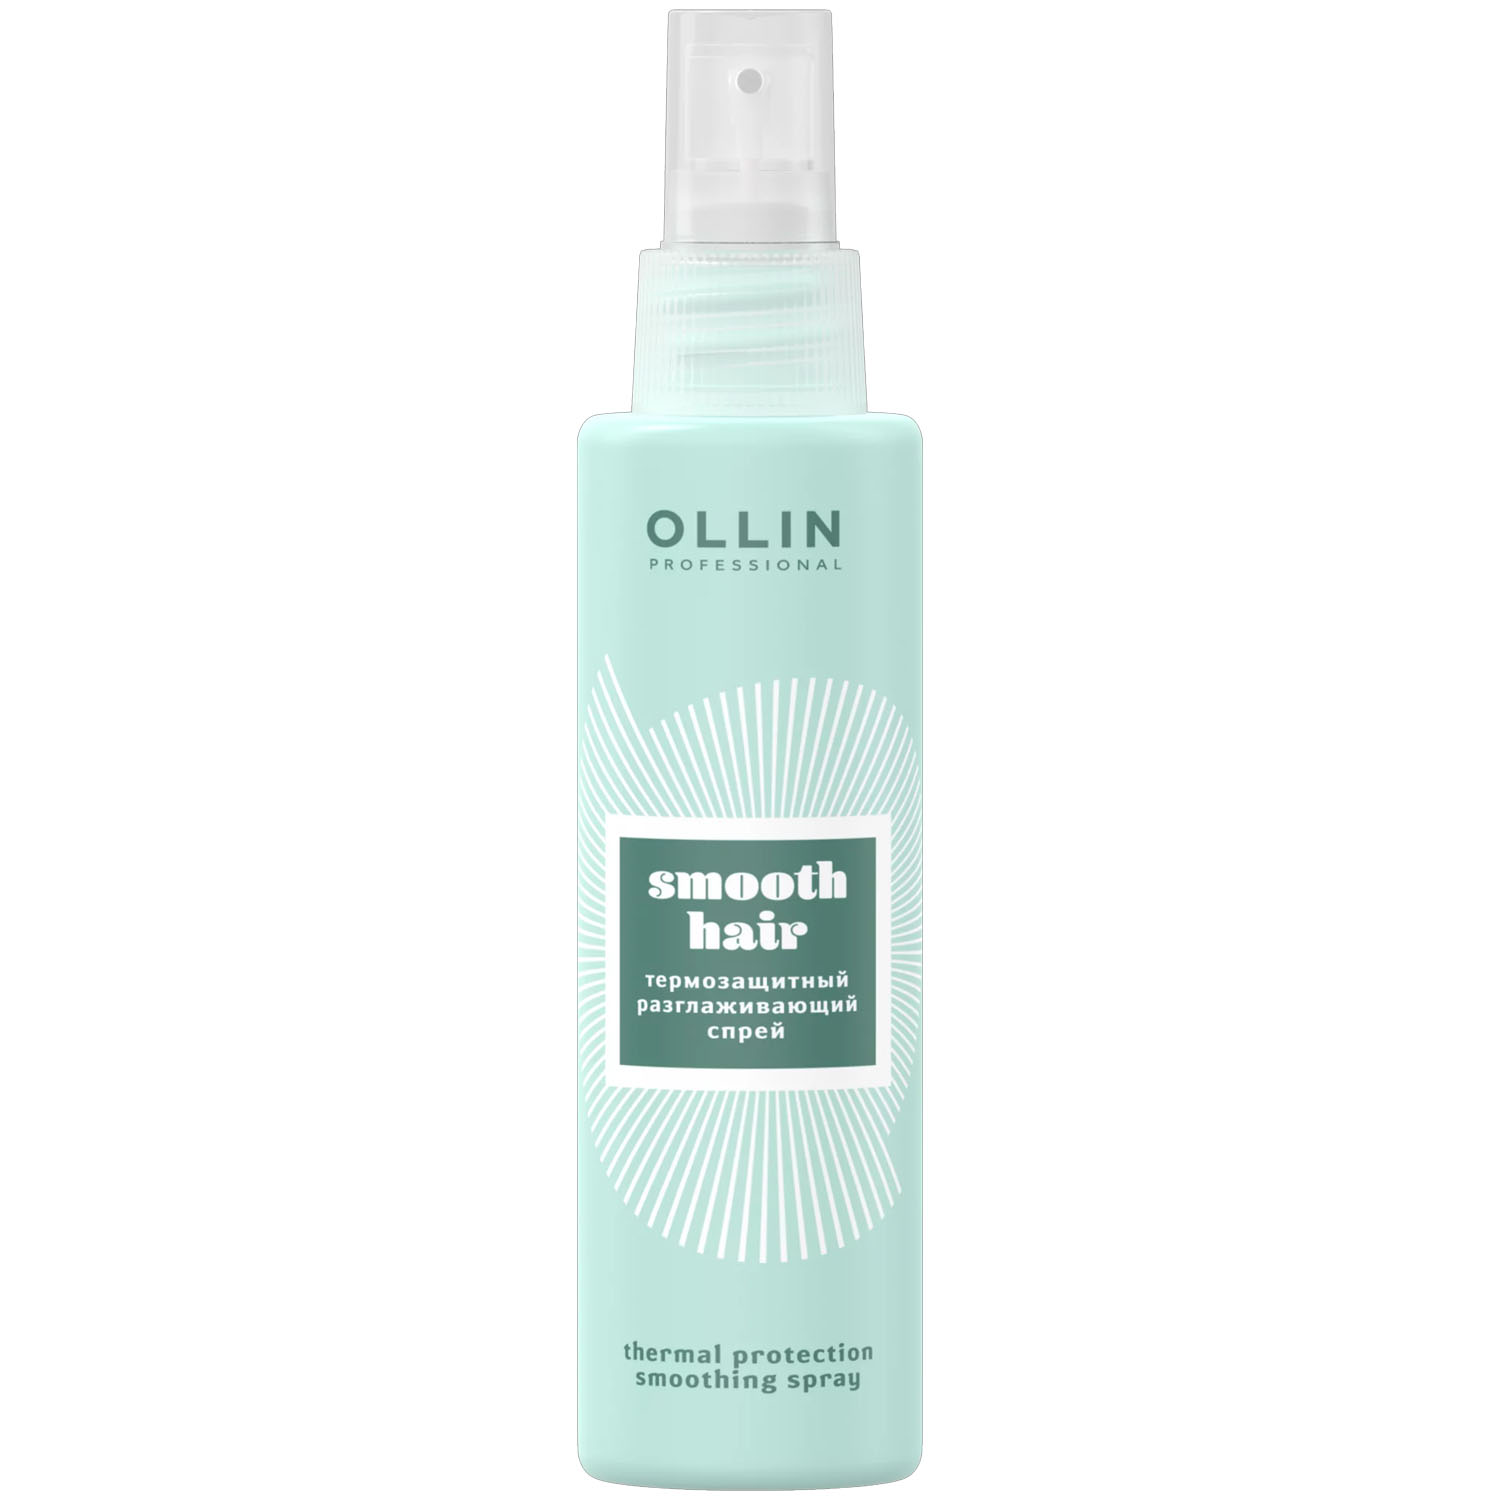 Ollin Professional Термозащитный разглаживающий спрей, 150 мл (Ollin Professional, Curl & Smooth Hair) термозащитный разглаживающий спрей ollin professional smooth hair 150 мл